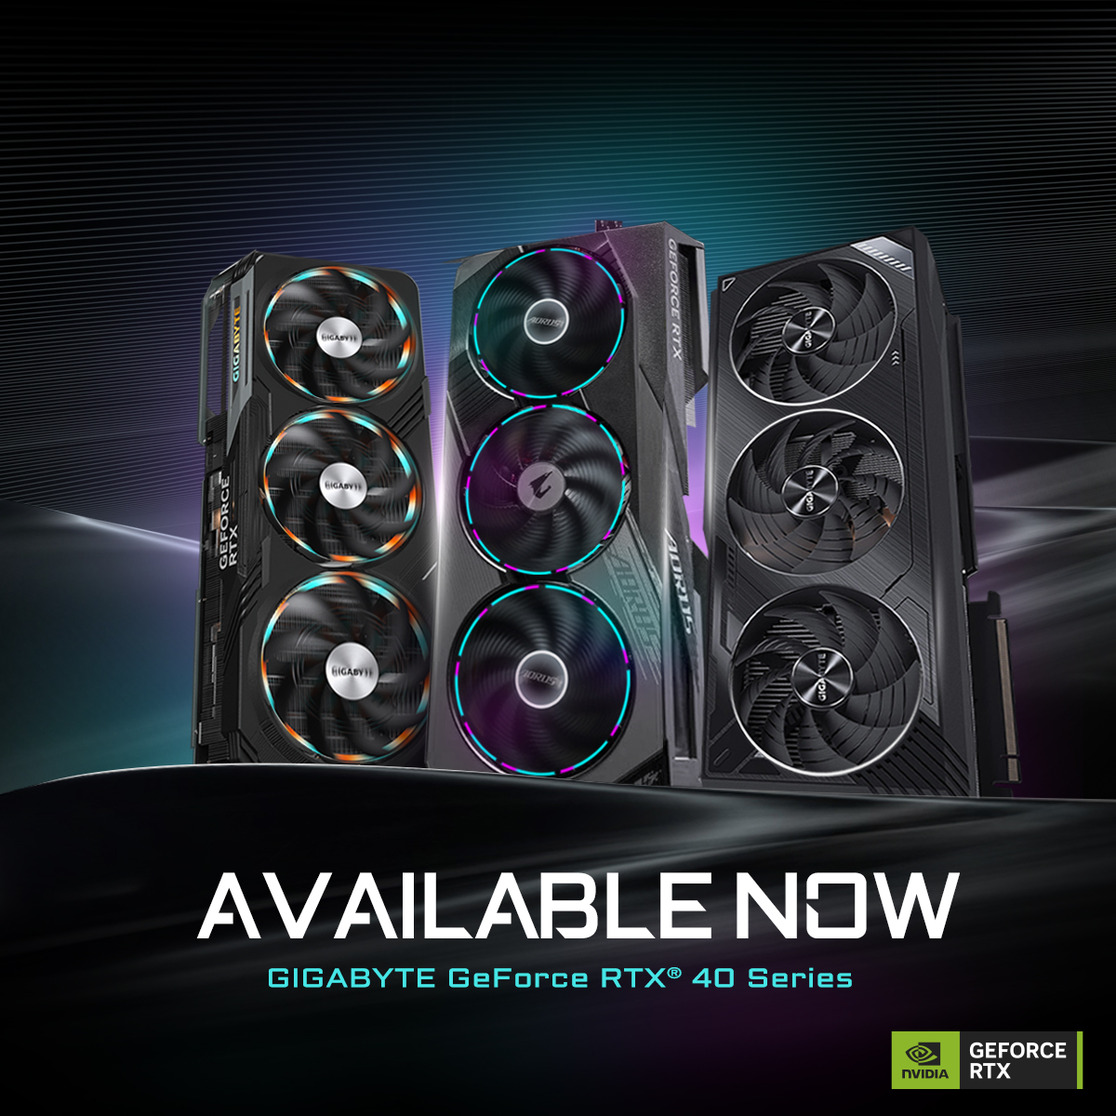 GIGABYTE GeForce RTX 40 Series Graphics Cards